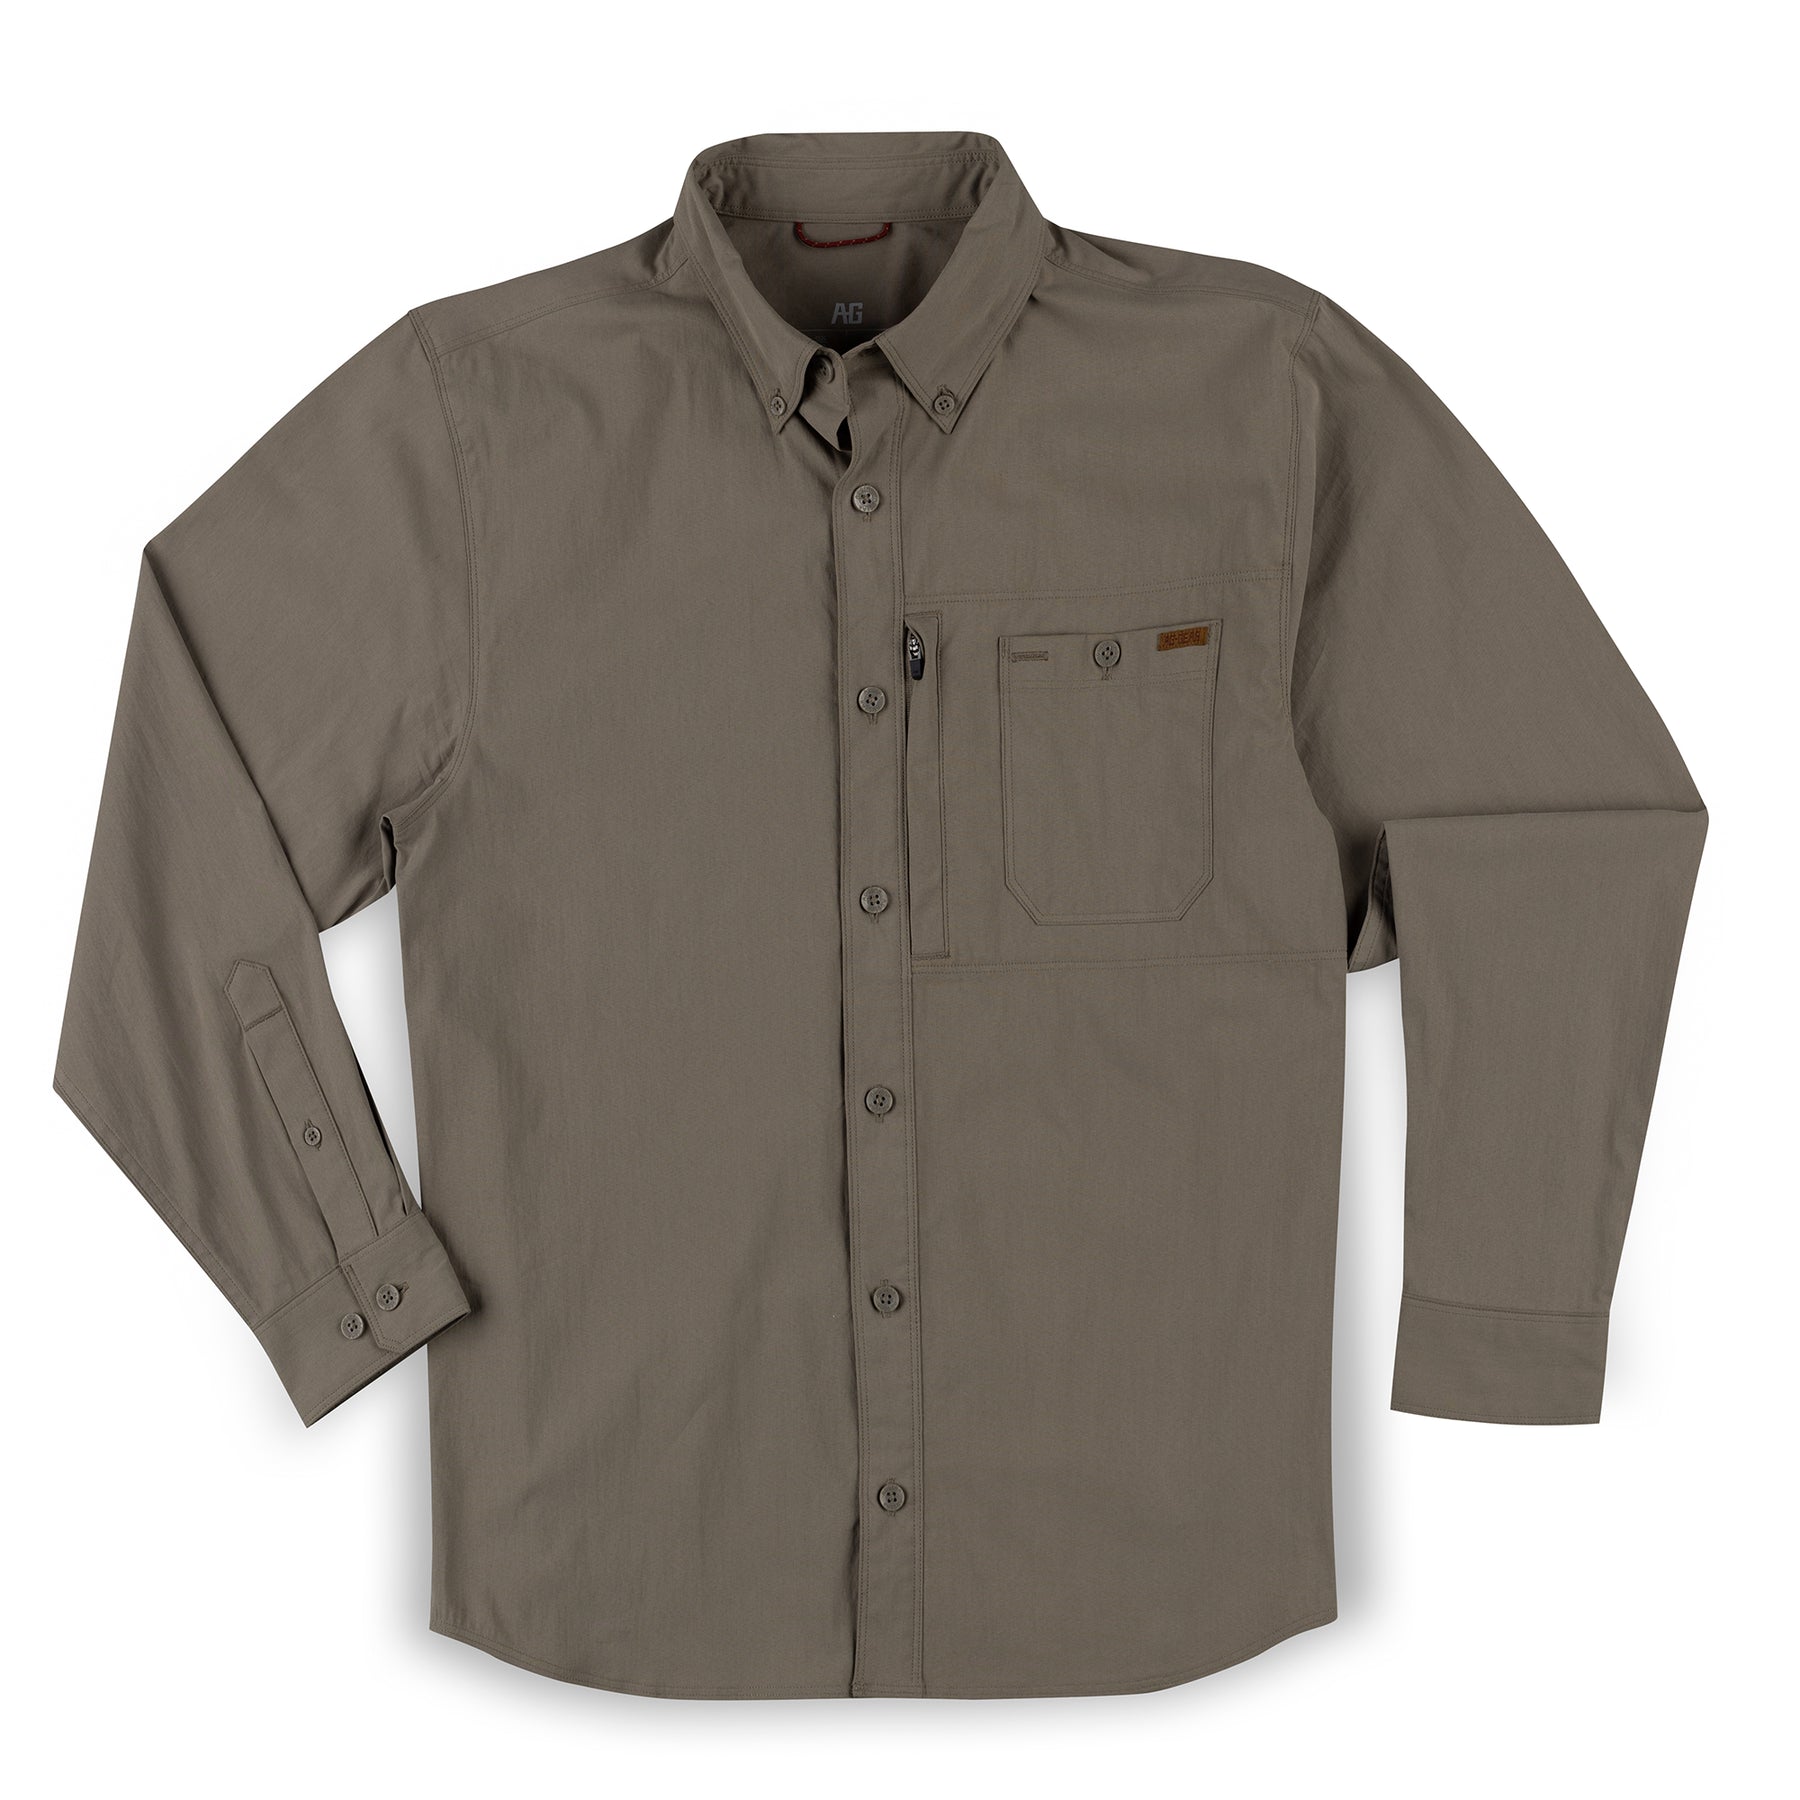 Cotton Farm Shirt, Durable, Water Resistant, Classic Fit, Ranch Shirt Brick / XL